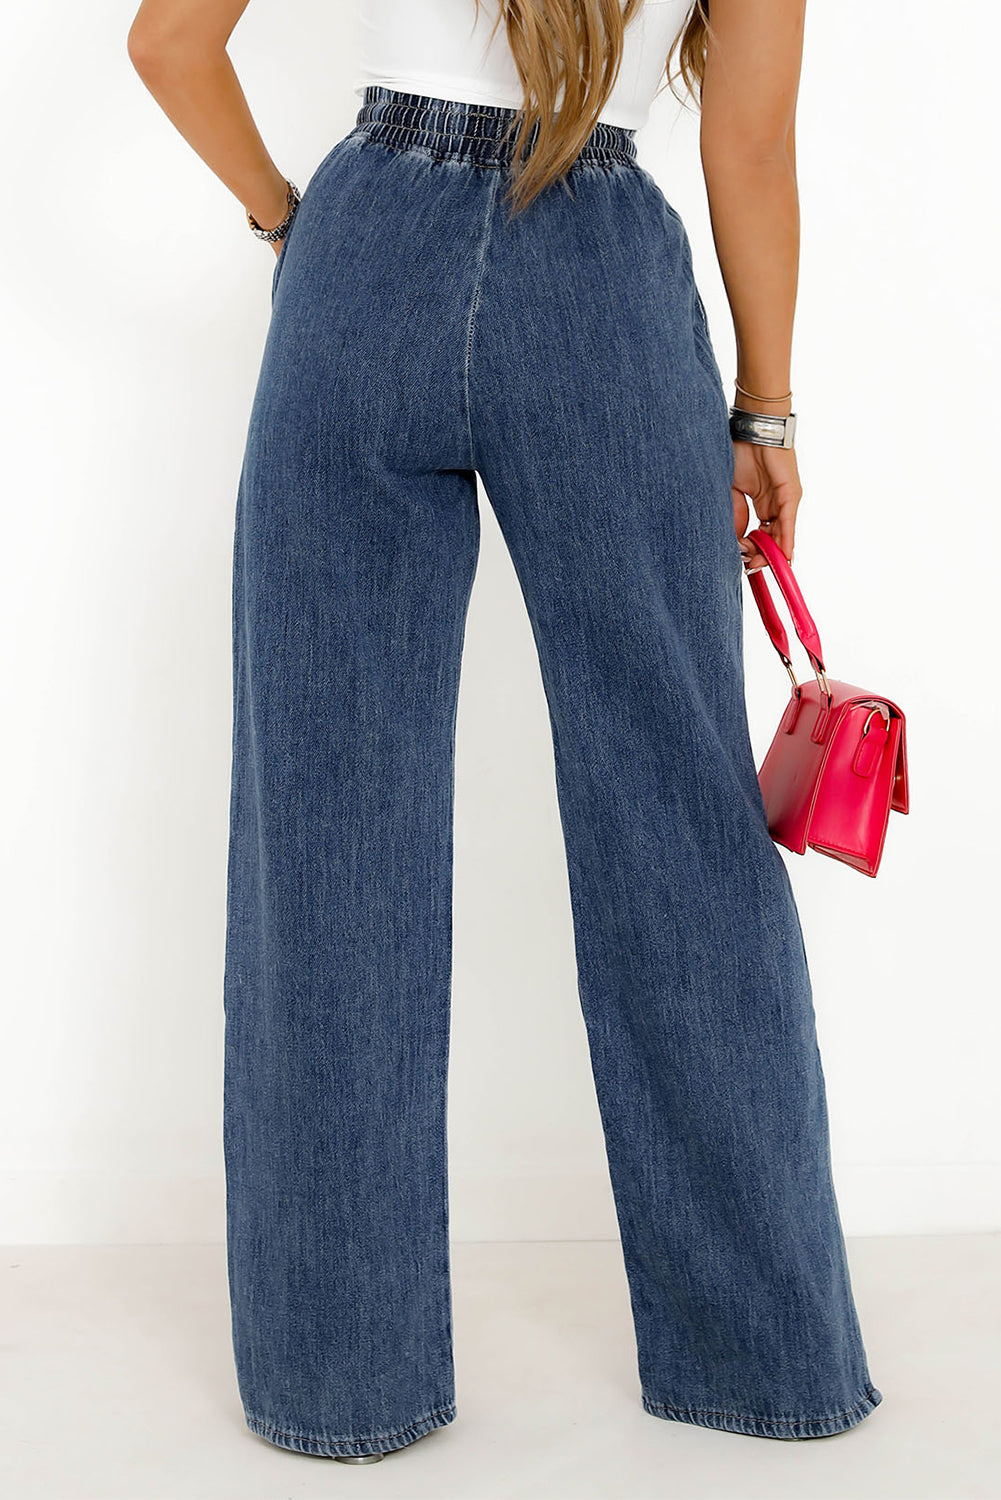 TEEK - Slit Wide Leg Pocketed Jeans JEANS TEEK Trend   